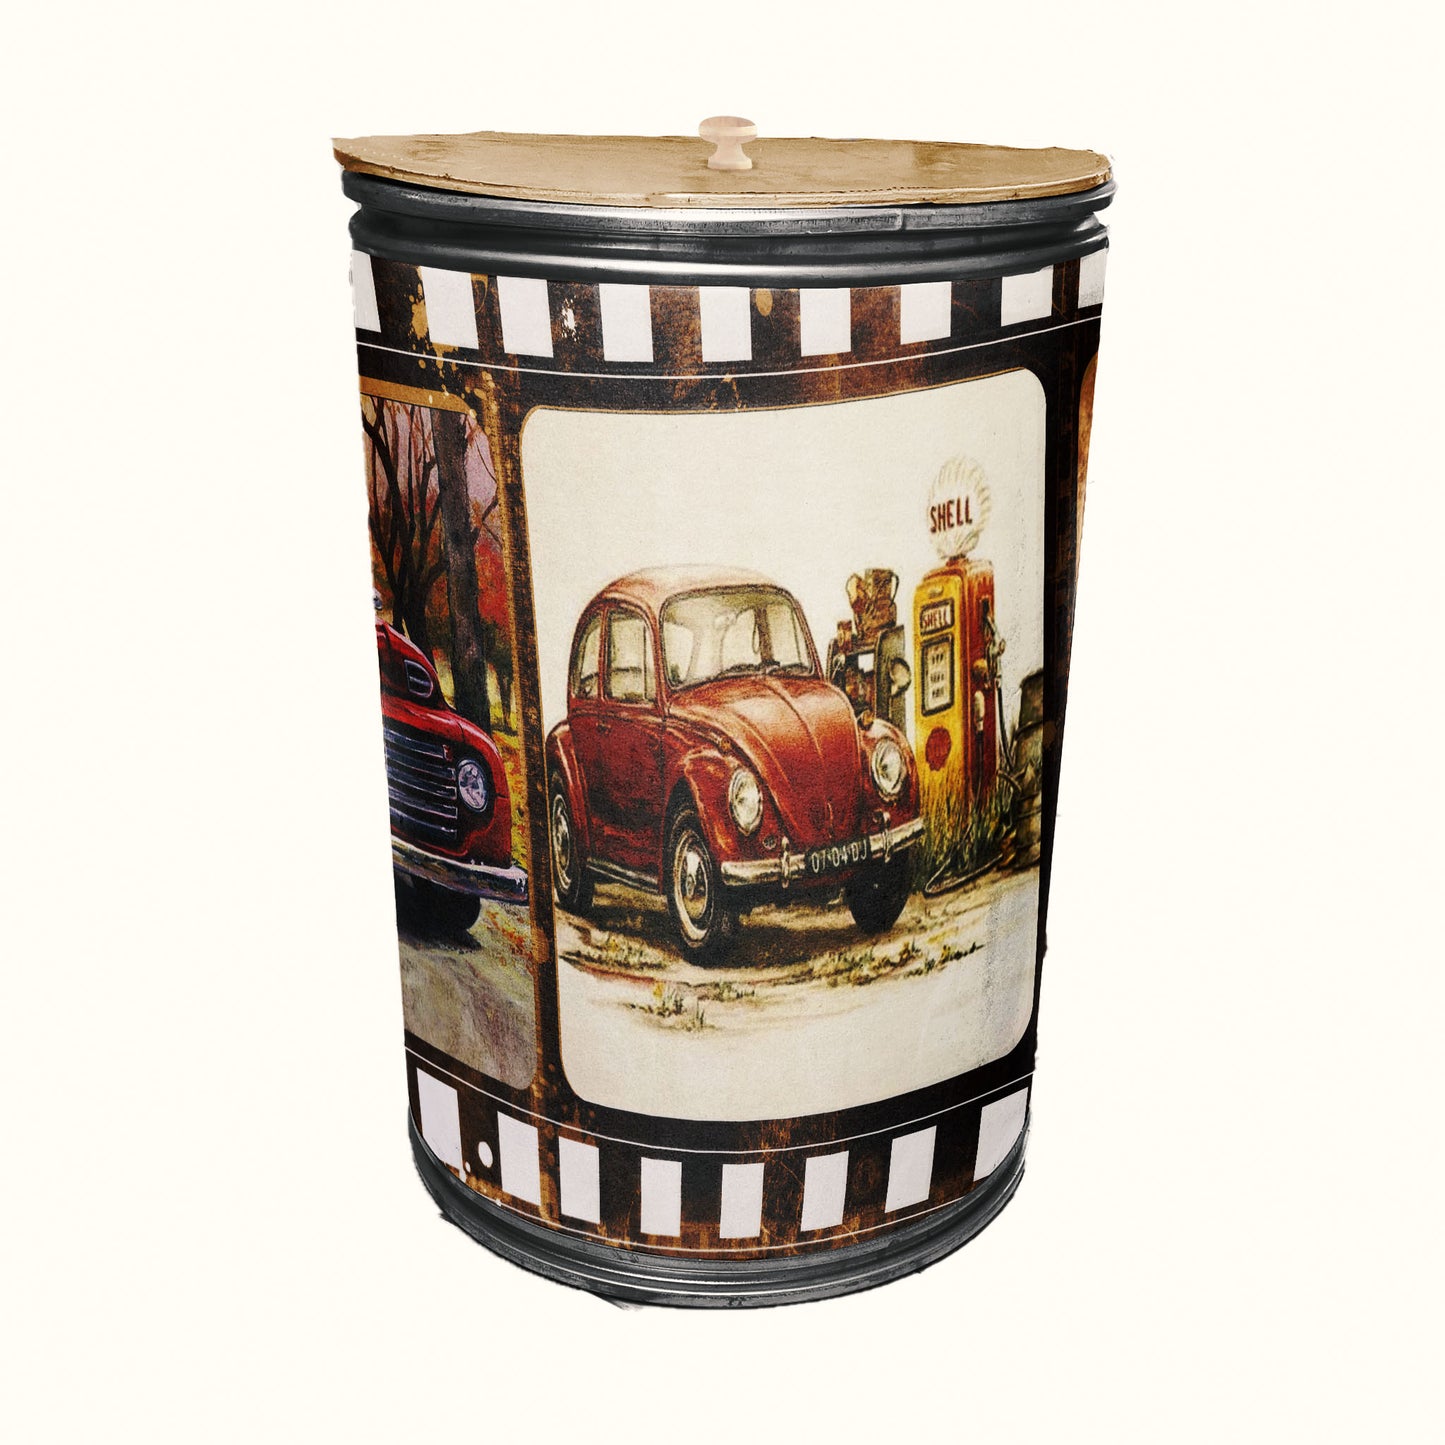 Vintage Car Reel Decoupage Drum Cover